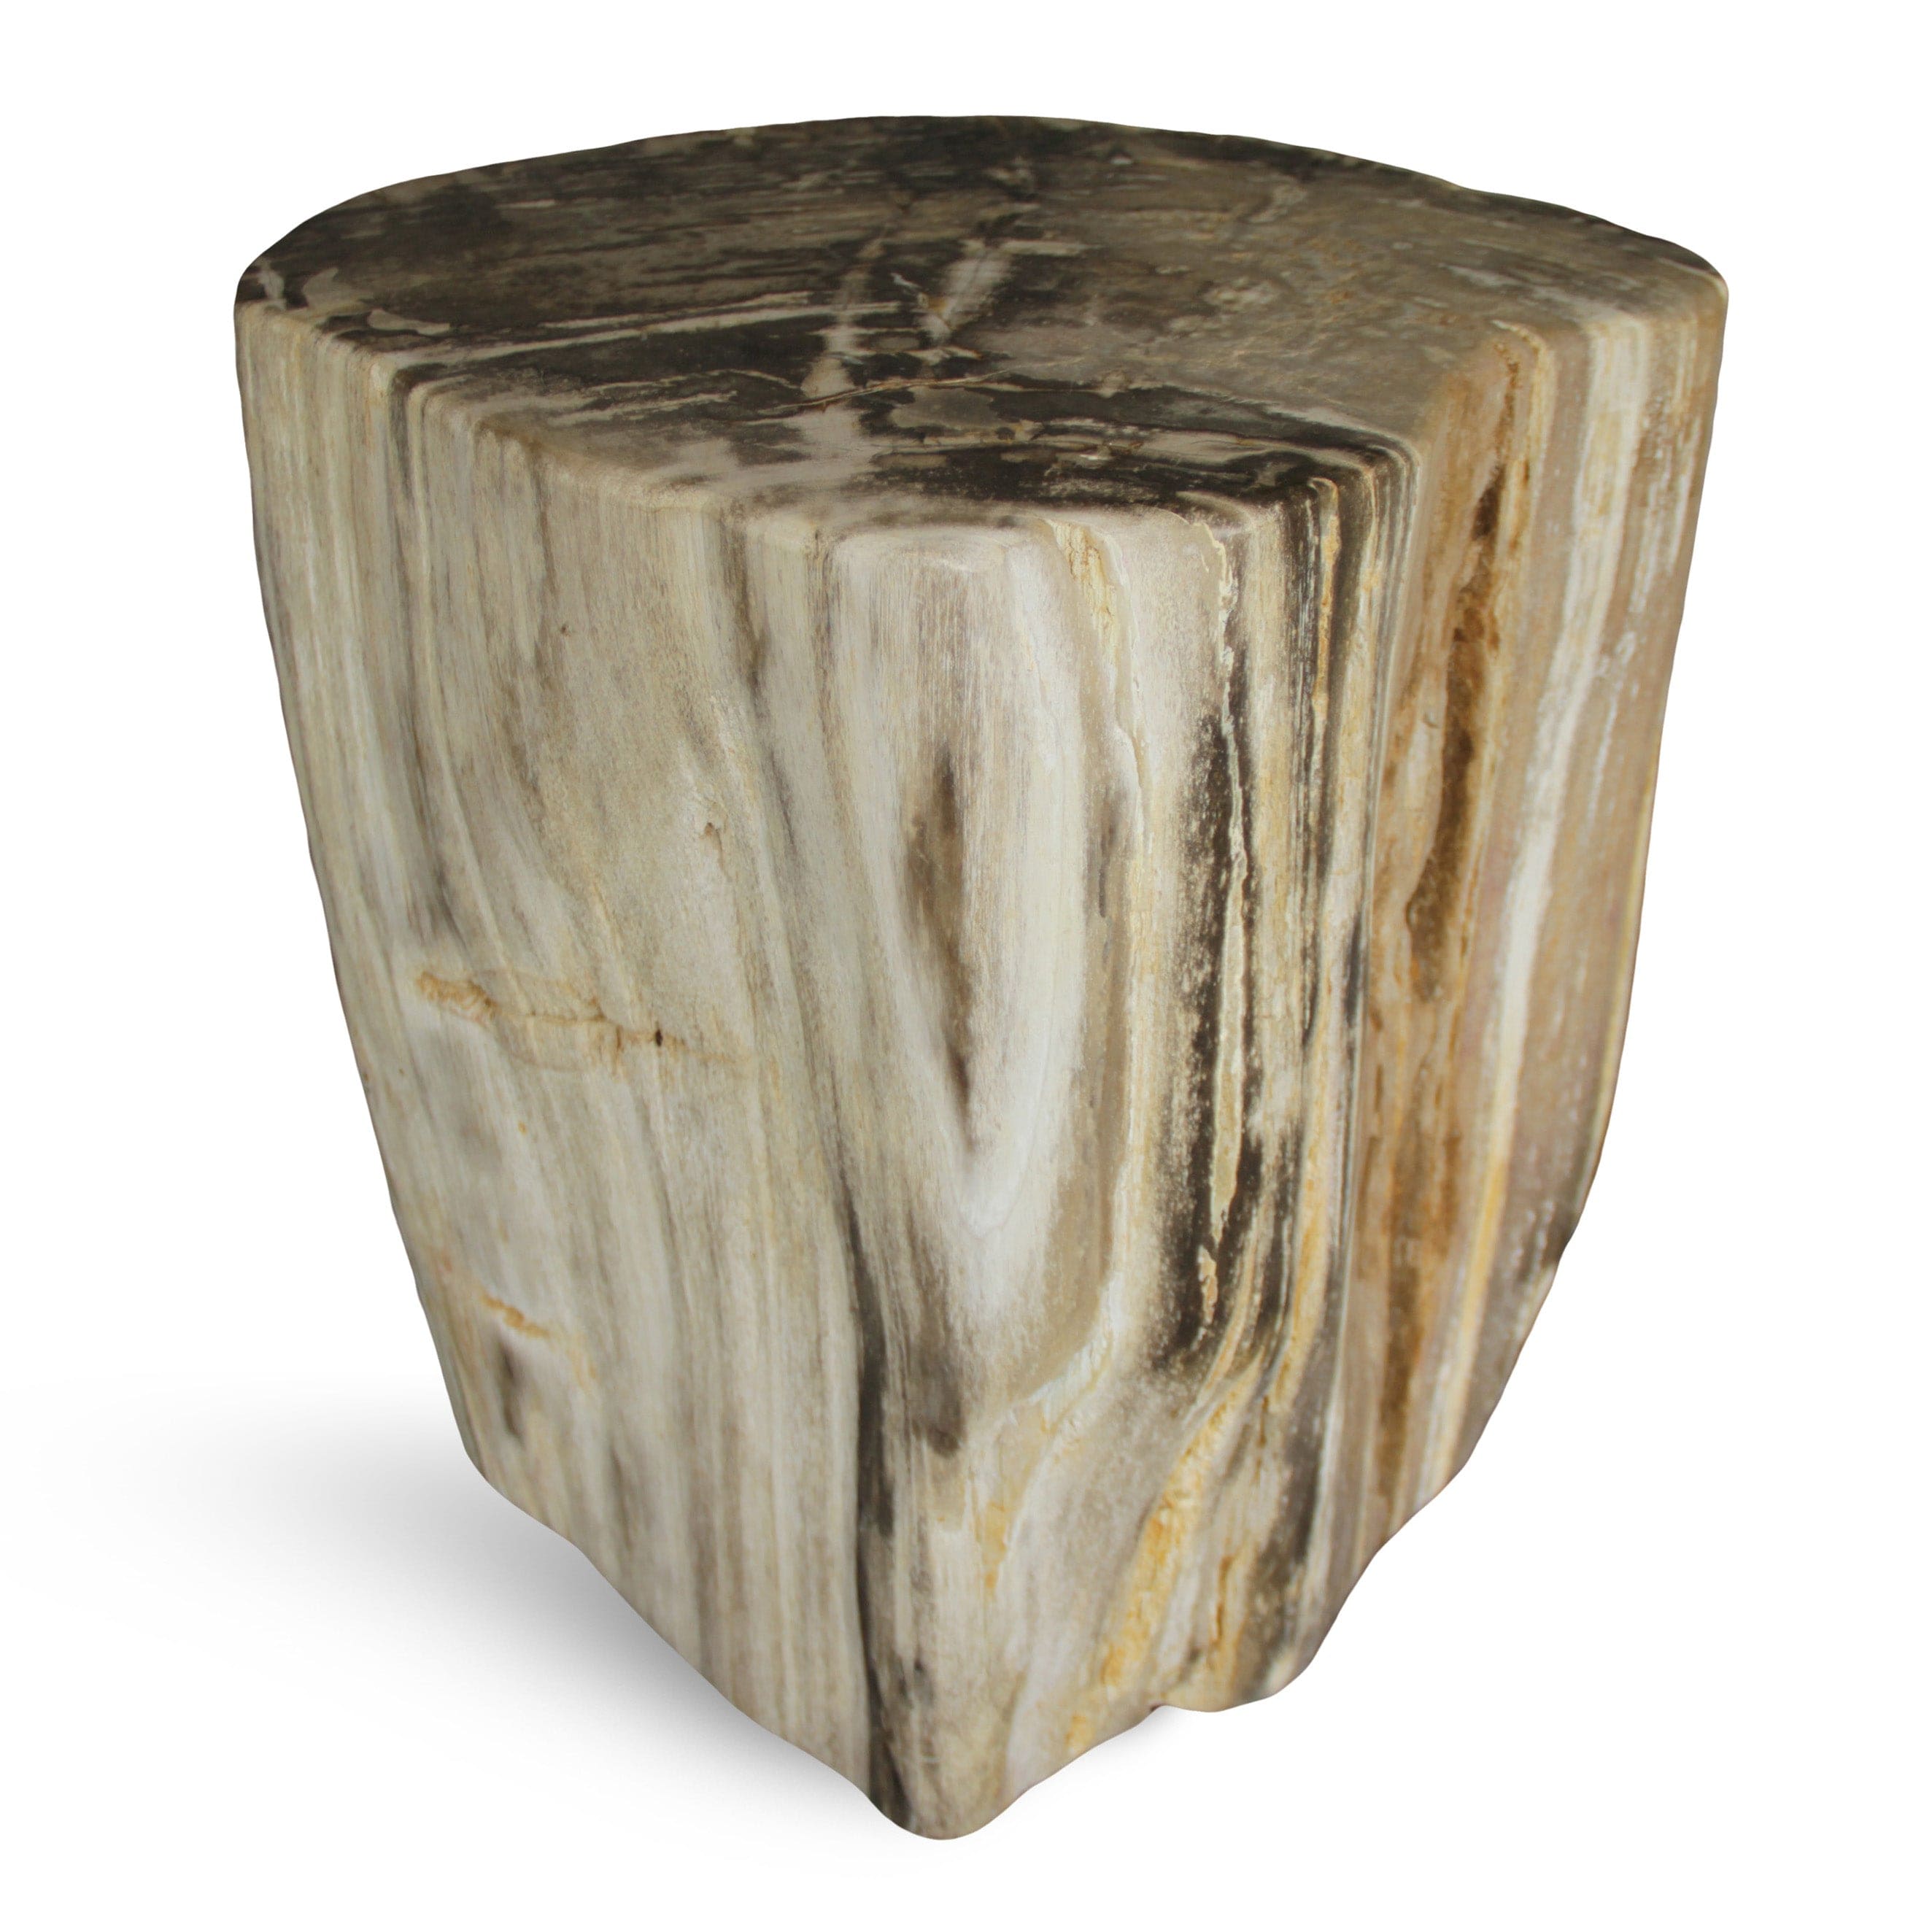 Kalifano Petrified Wood Petrified Wood Round Stump / Stool from Indonesia - 18" / 295 lbs PWS5400.002